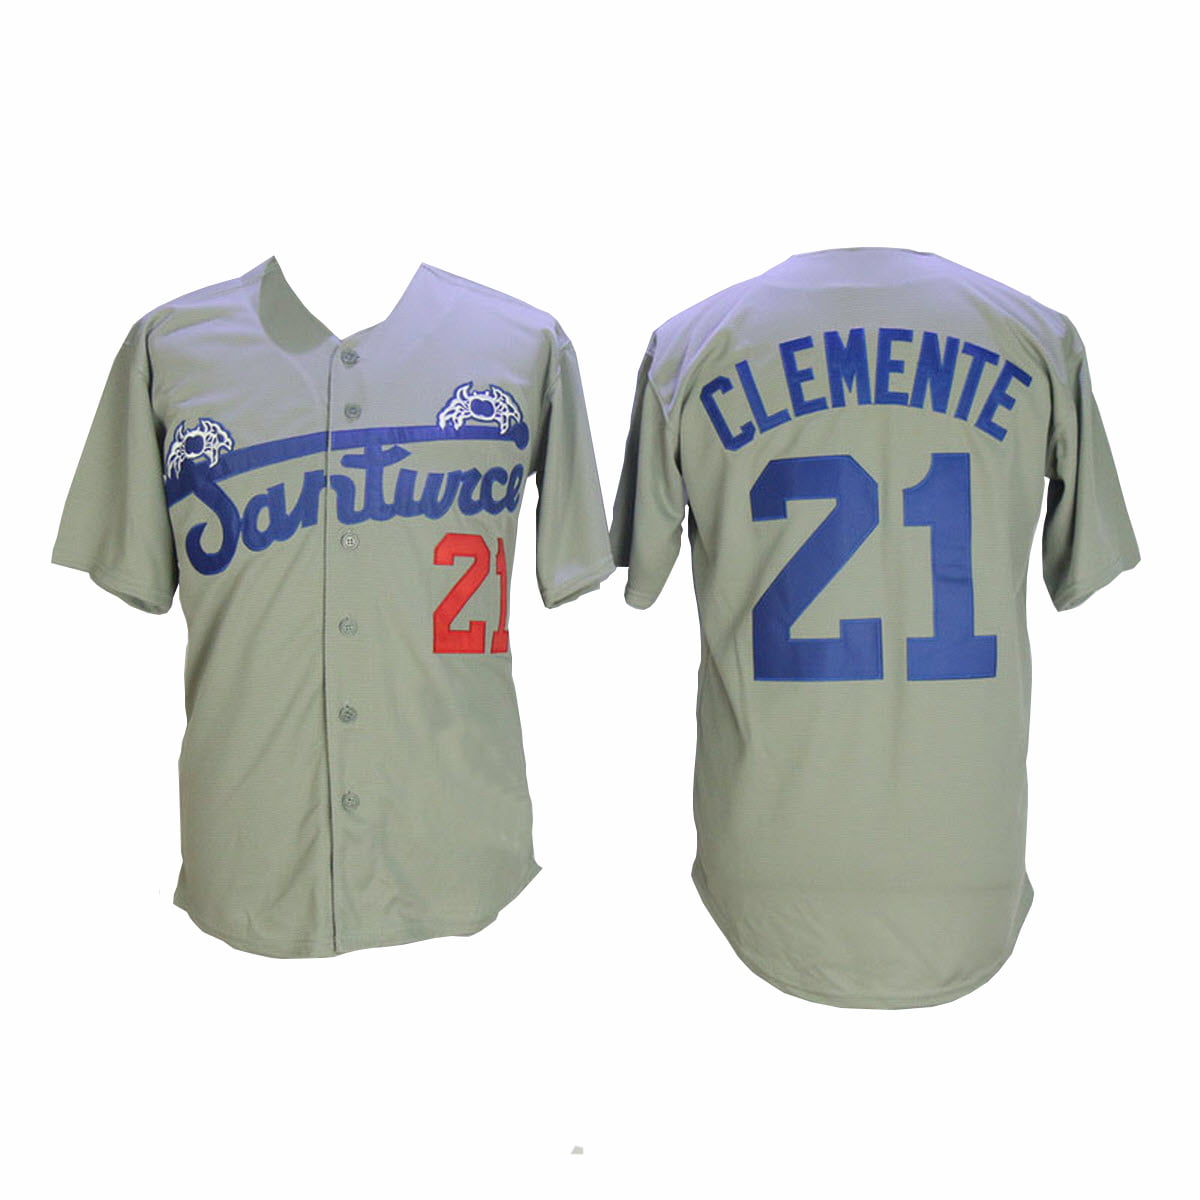 #21 Roberto Clemente Santurce Crabbers Puerto Rico Baseball Jersey Stitched 5 Colors 